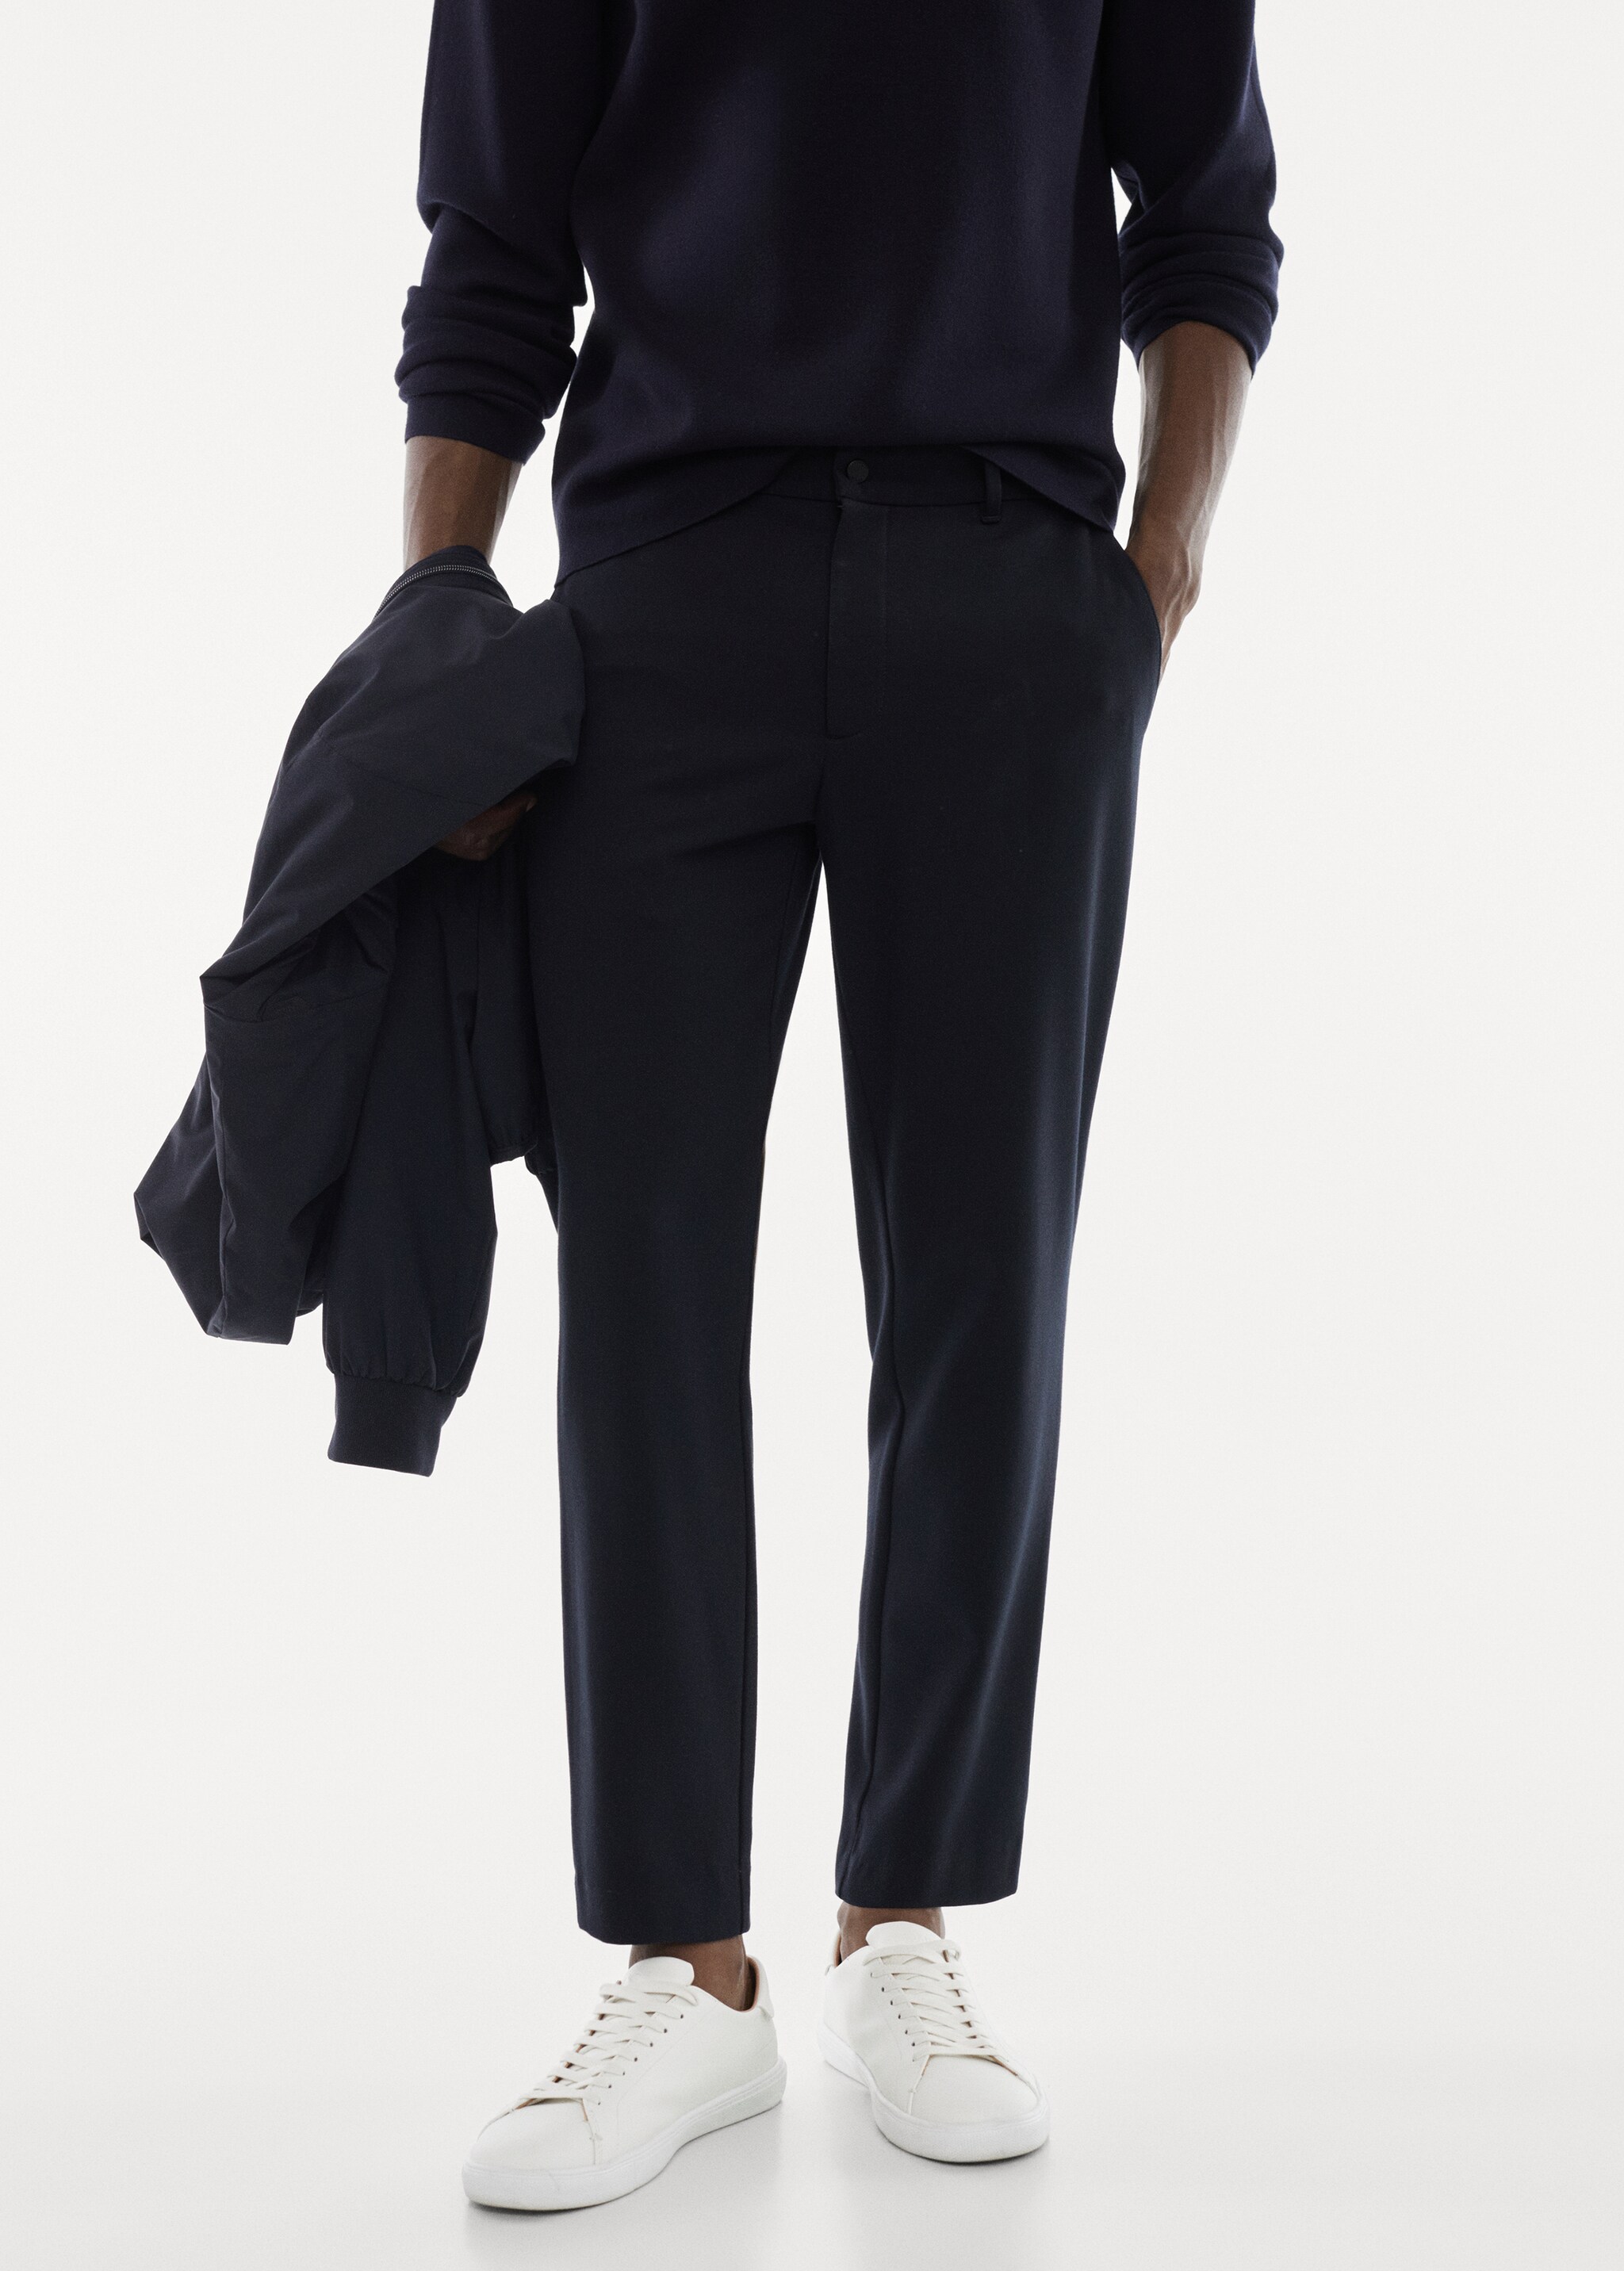 Crease-resistant slim-fit trousers - Medium plane